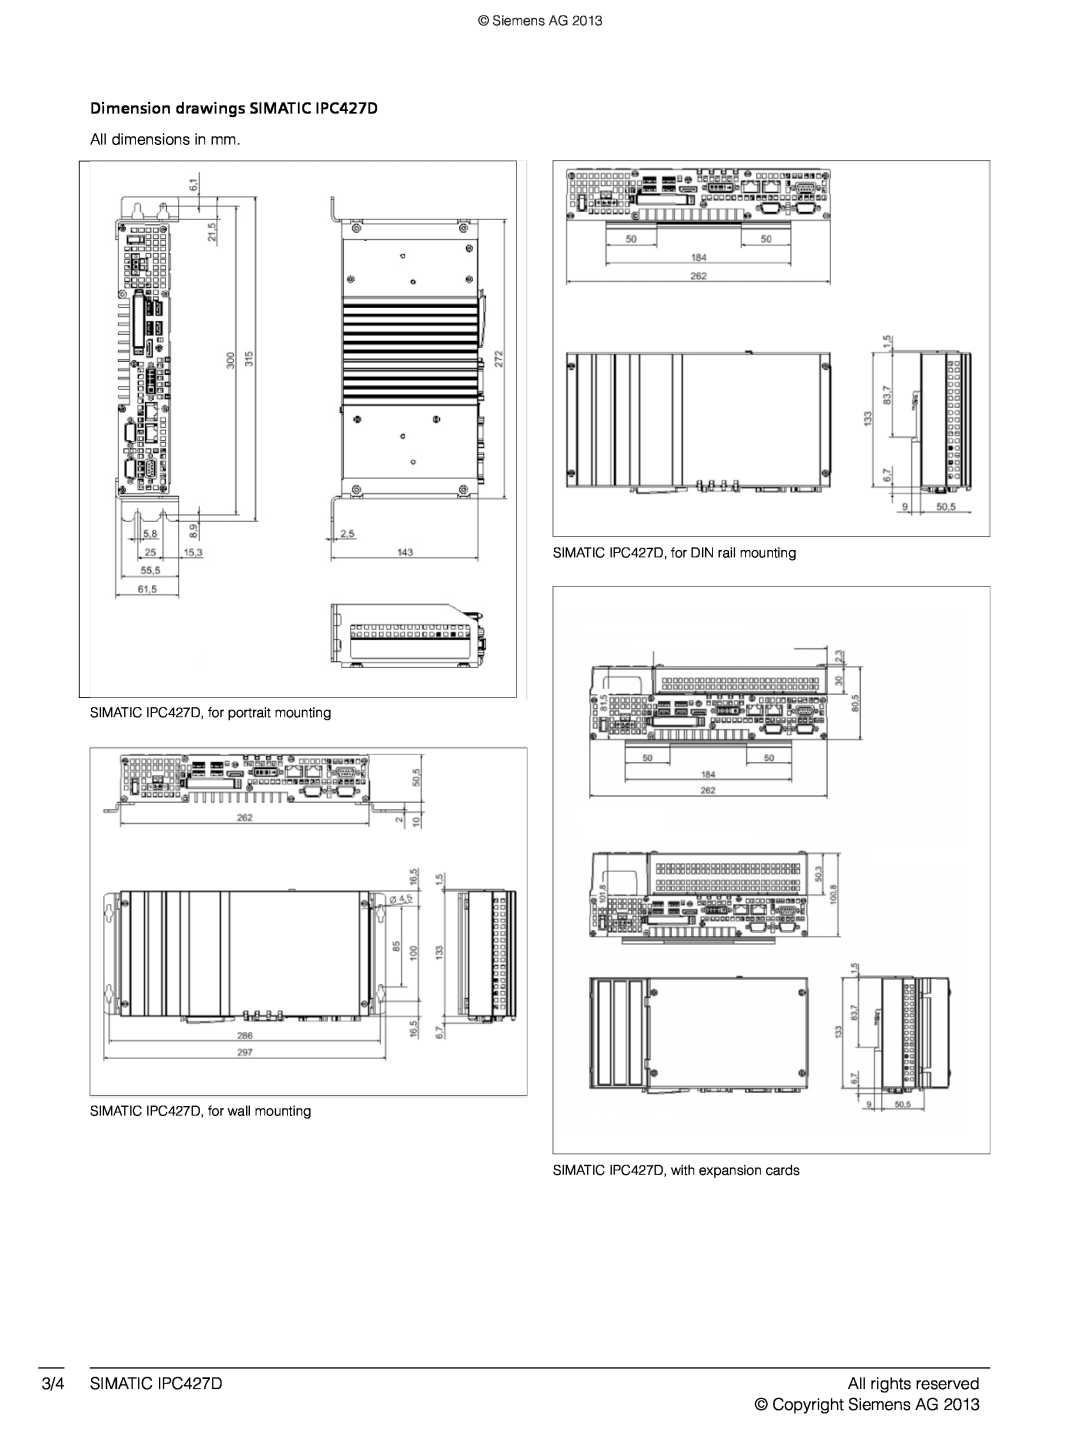 Siemens manual Dimension drawings SIMATIC IPC427D, 3/4 SIMATIC IPC427D, All rights reserved, All dimensions in mm 